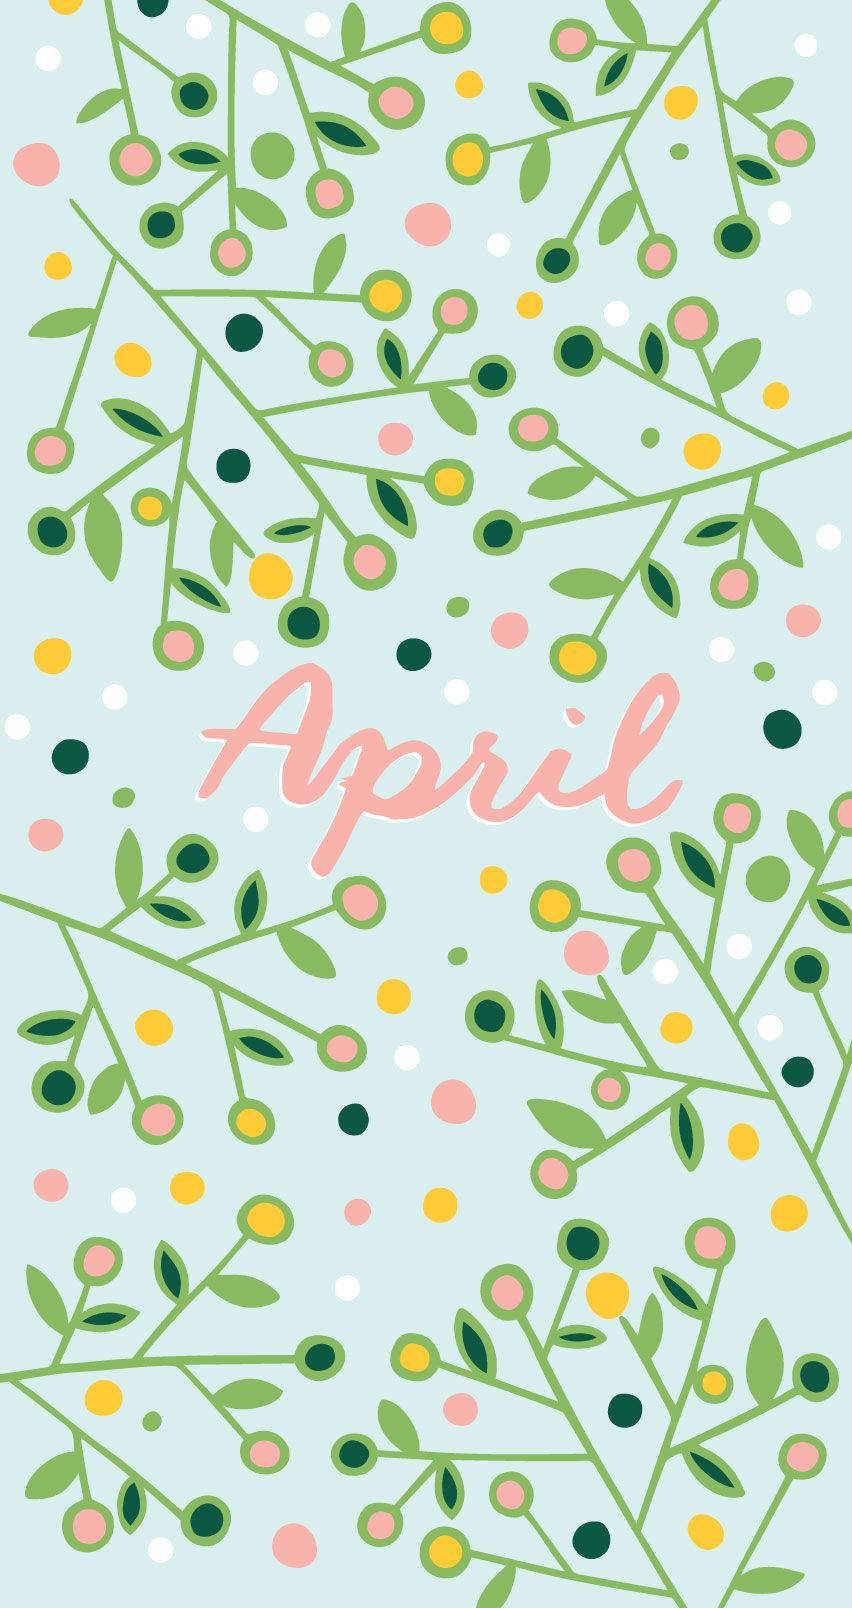 Celebrate Spring's Beauty With April’s Floral Digital Artwork. Background